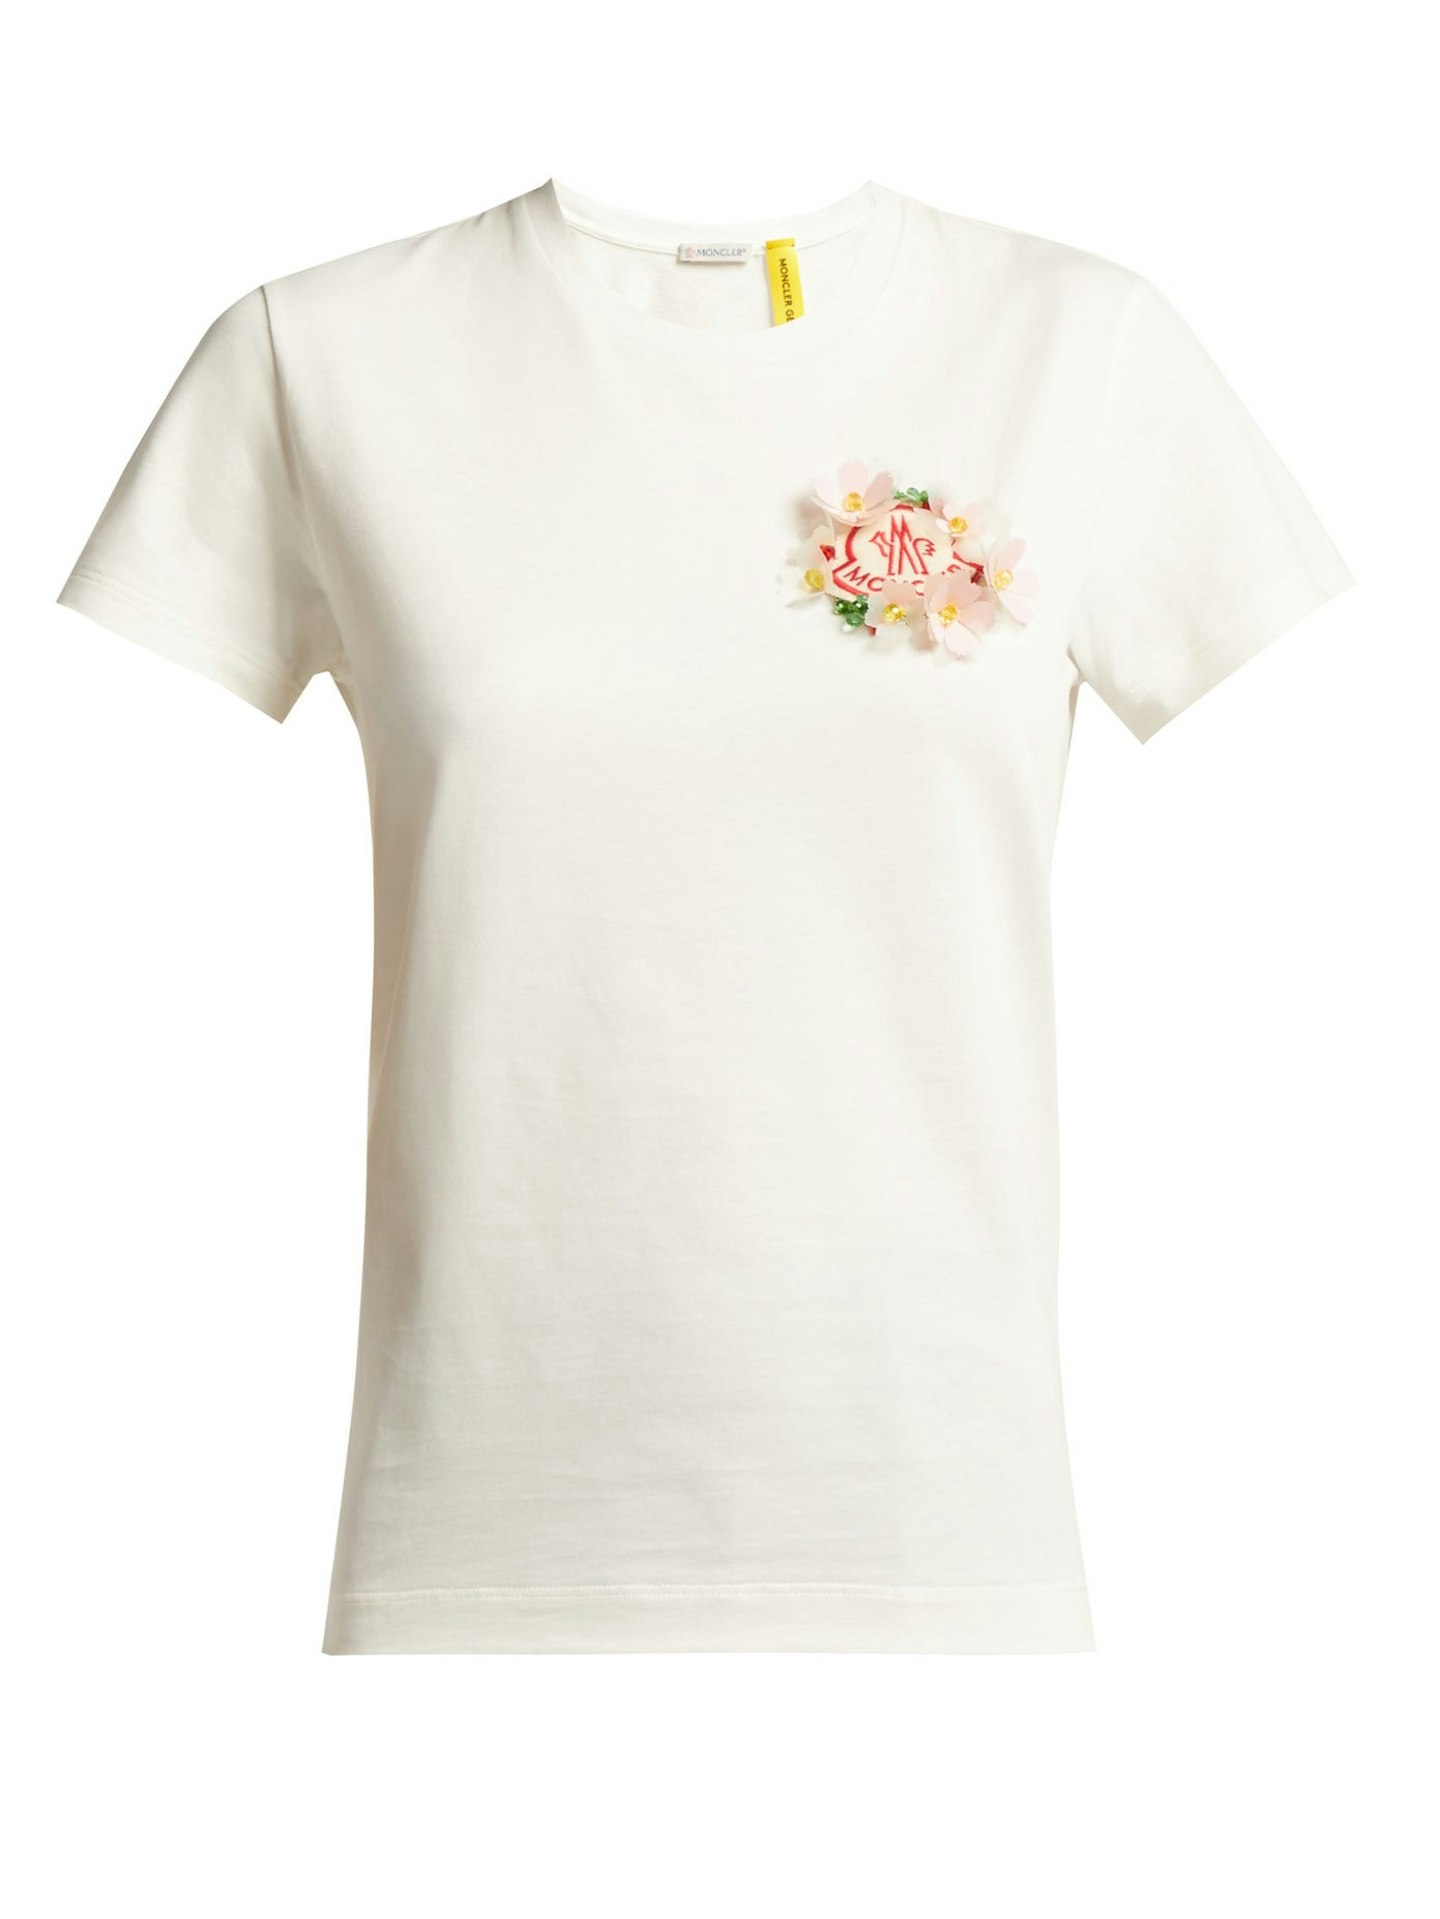 4 Moncler Simone Rocha, Cotton T-Shirt With Flower Logo, £340